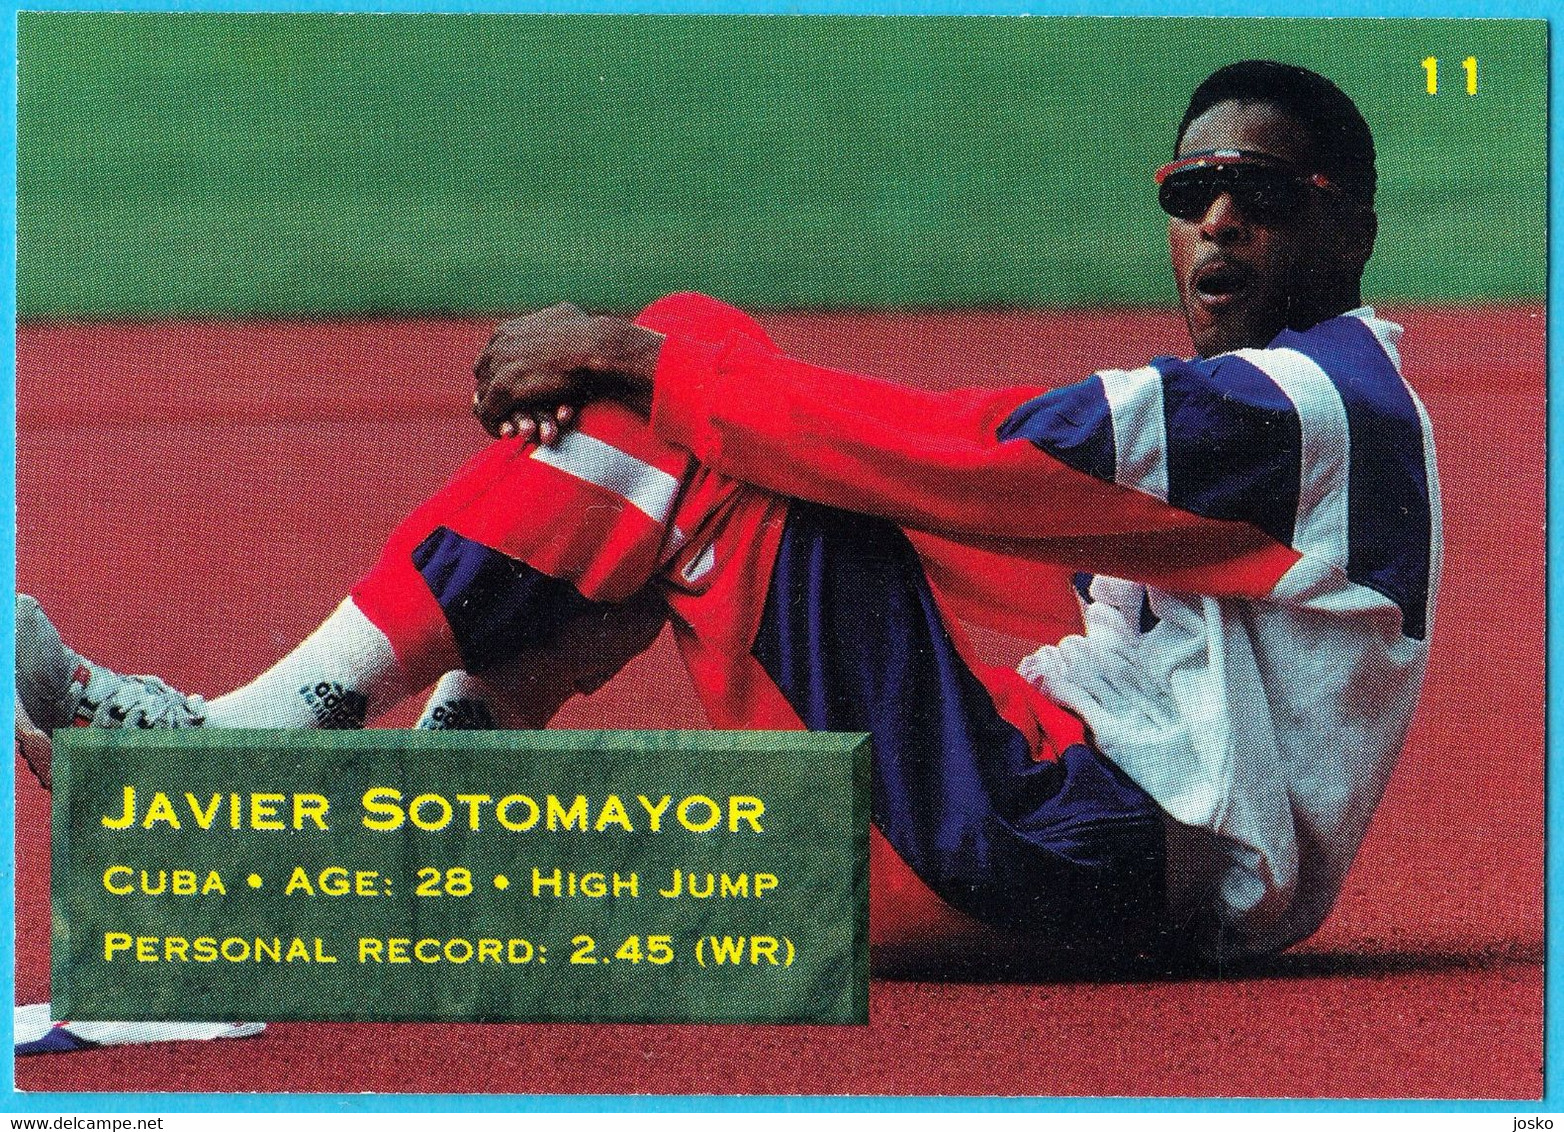 JAVIER SOTOMAYOR Cuba (High Jump) - 1995 WORLD CHAMPIONSHIPS IN ATHLETICS - Trading Card * Athletisme Athletik Atletica - Trading Cards